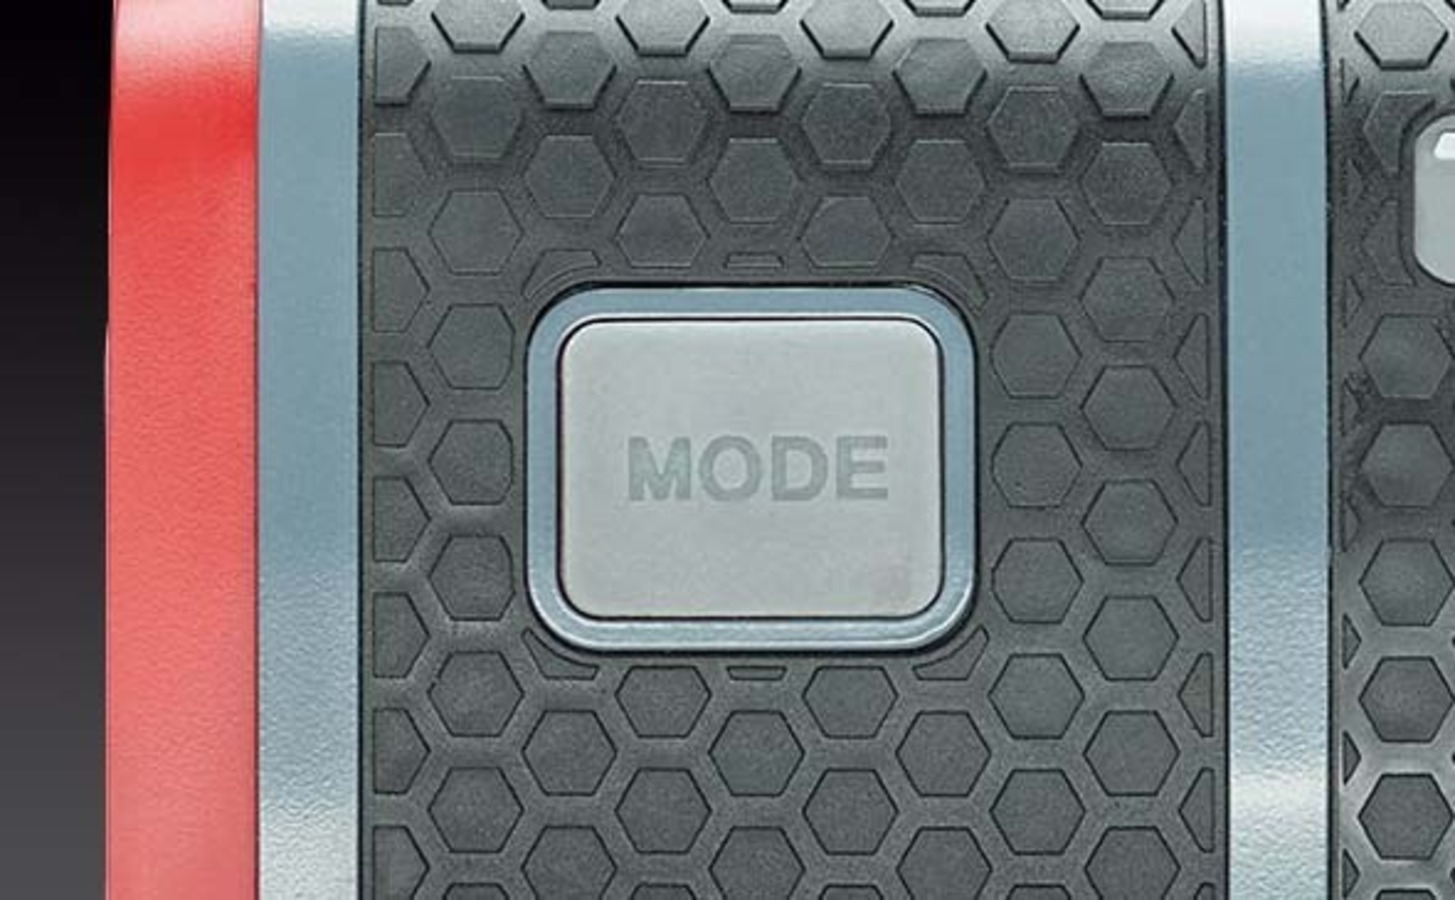 MODEボタン 左側面のMODEボタンで「スロープモード」「直線距離モード」に切り替え。